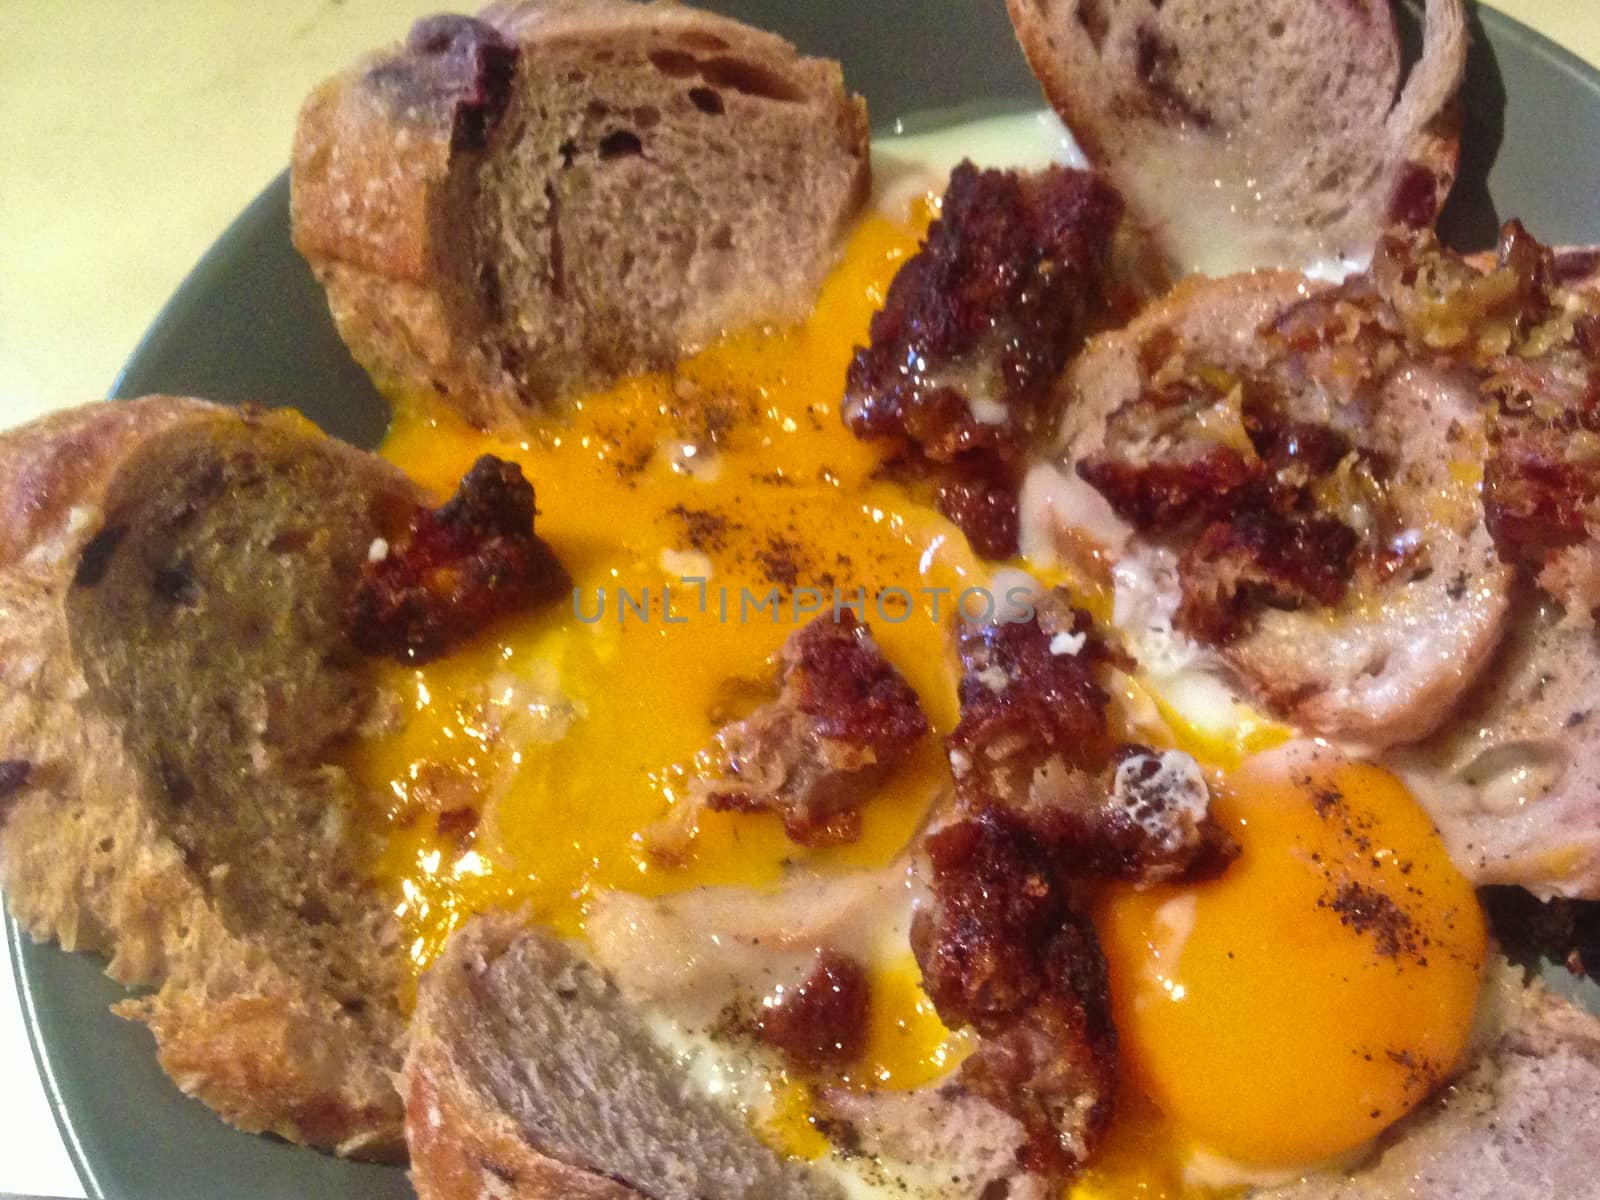 Simple American breakfast egg bread and bacon by eyeofpaul